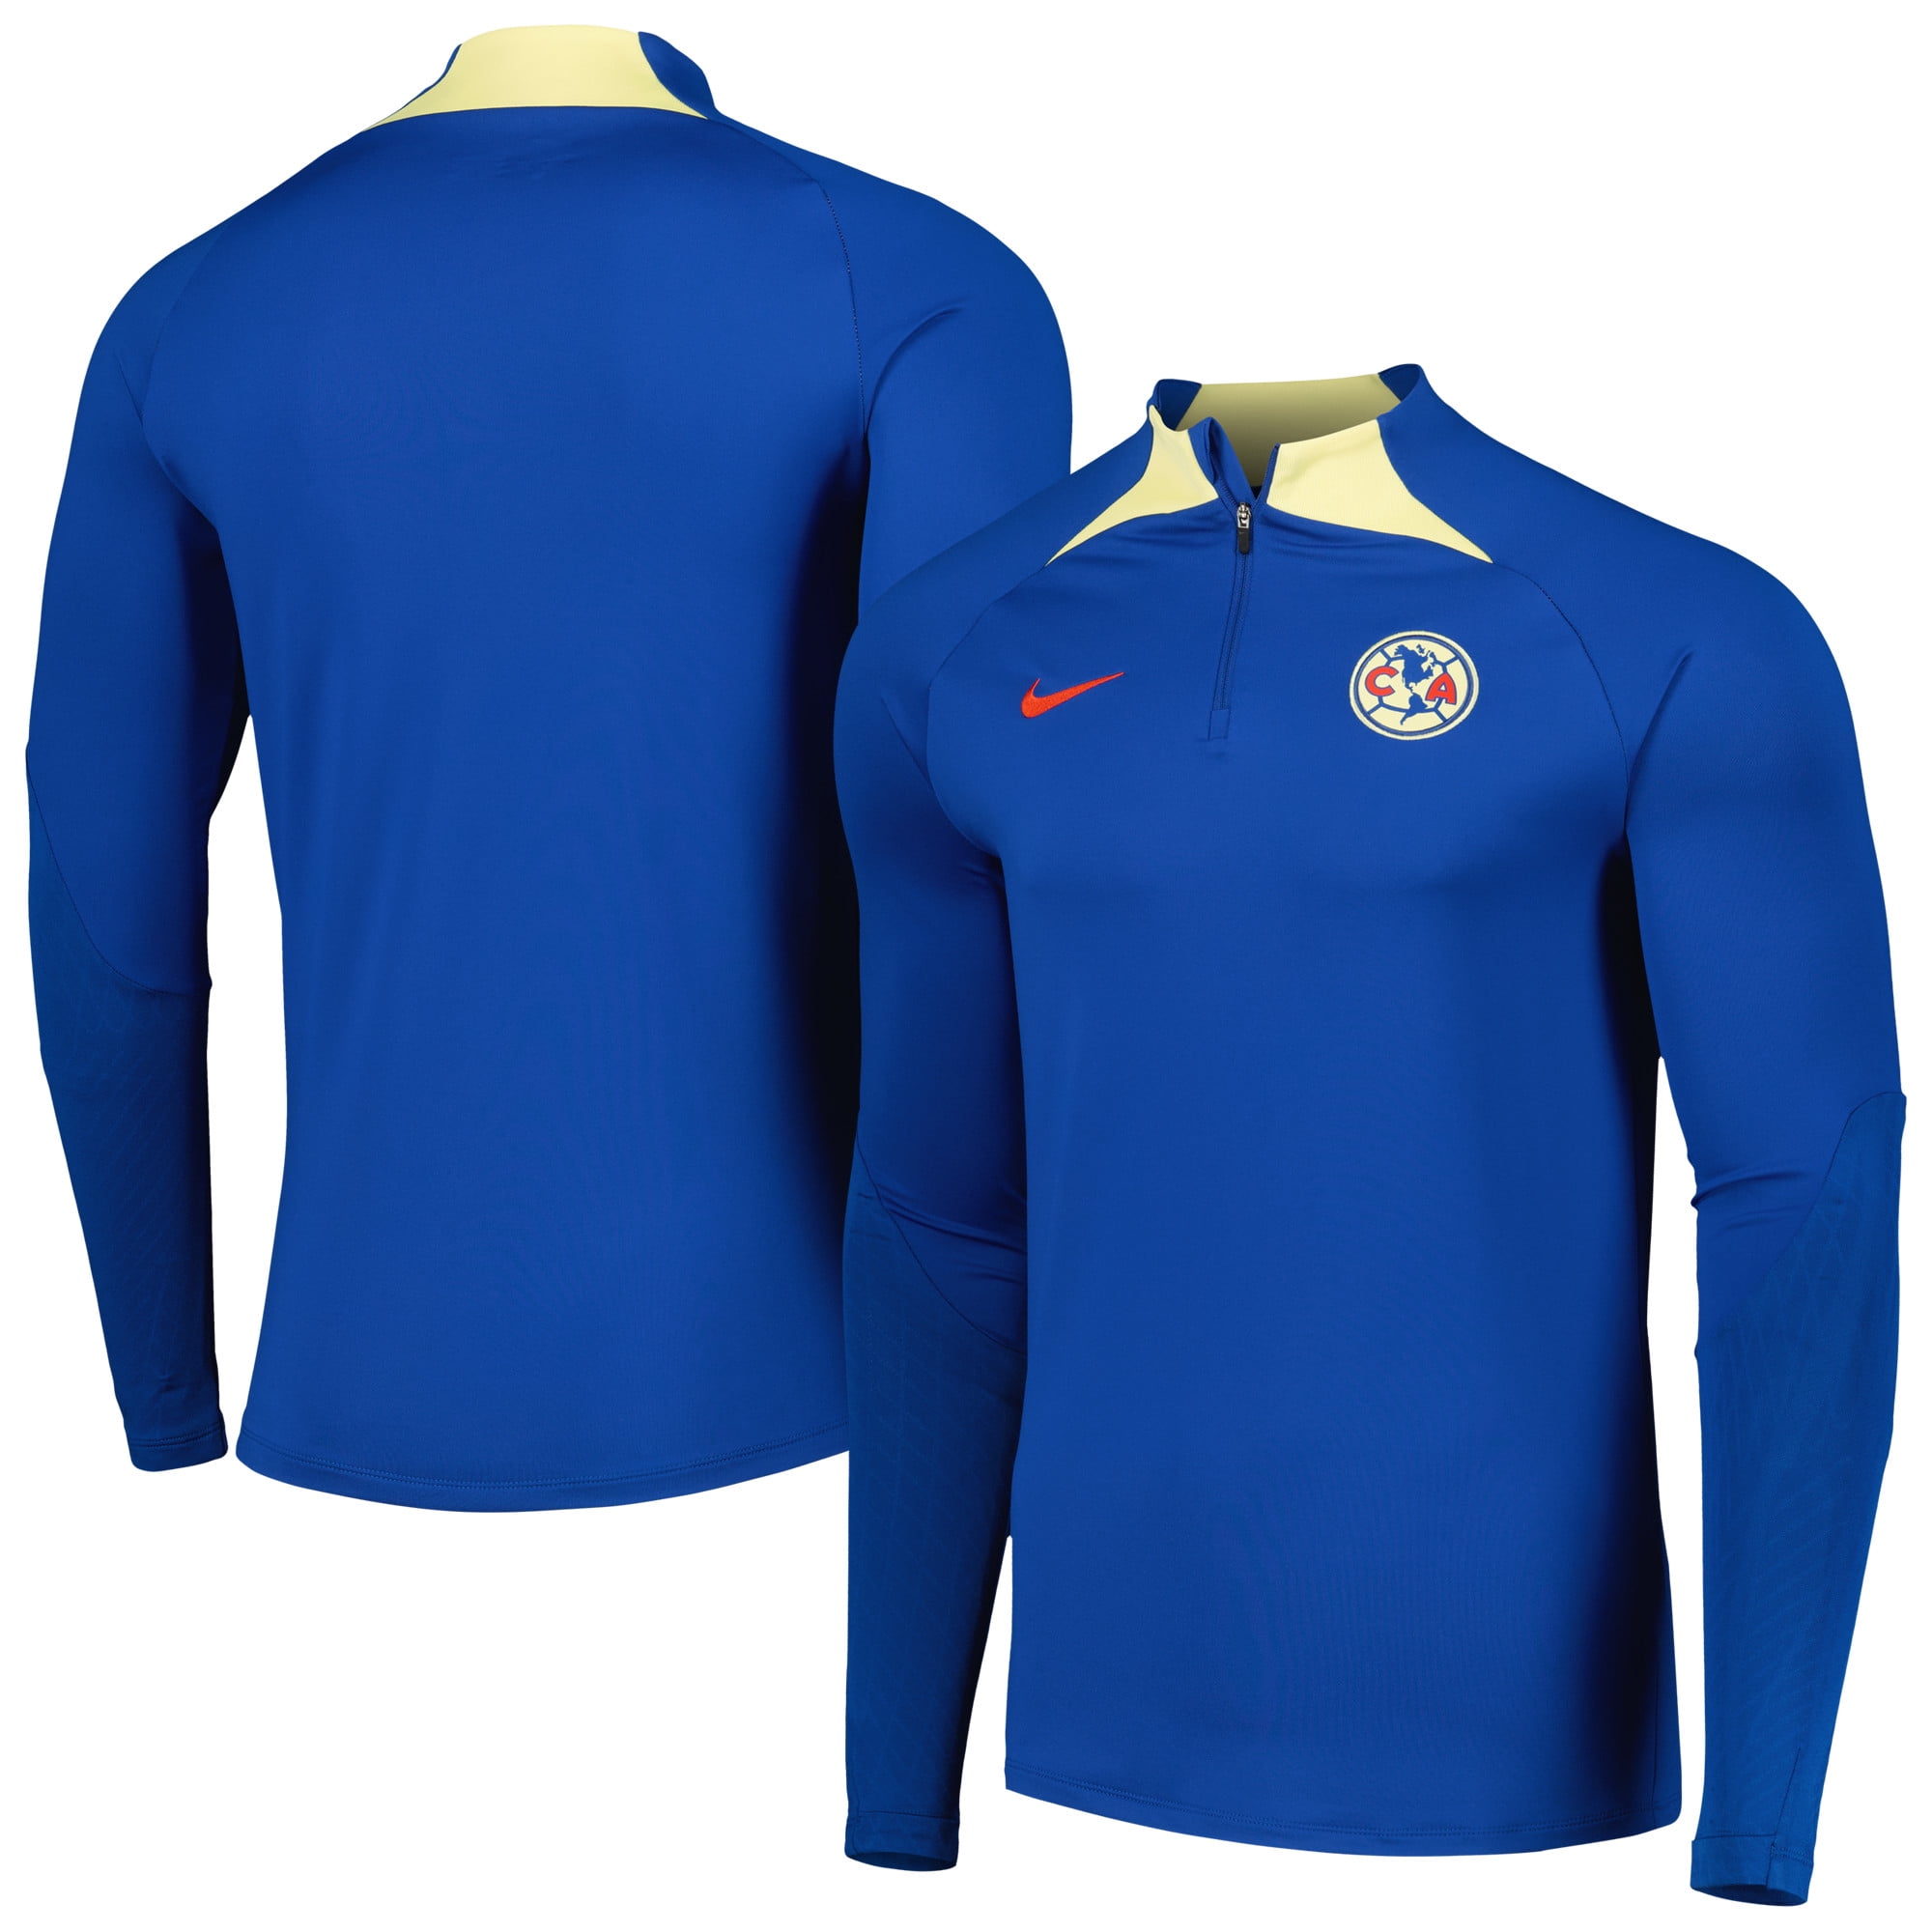 Nike 2022-23 Brazil Strike Training Jersey  Long sleeve tshirt men,  Football tops, Nike dri fit